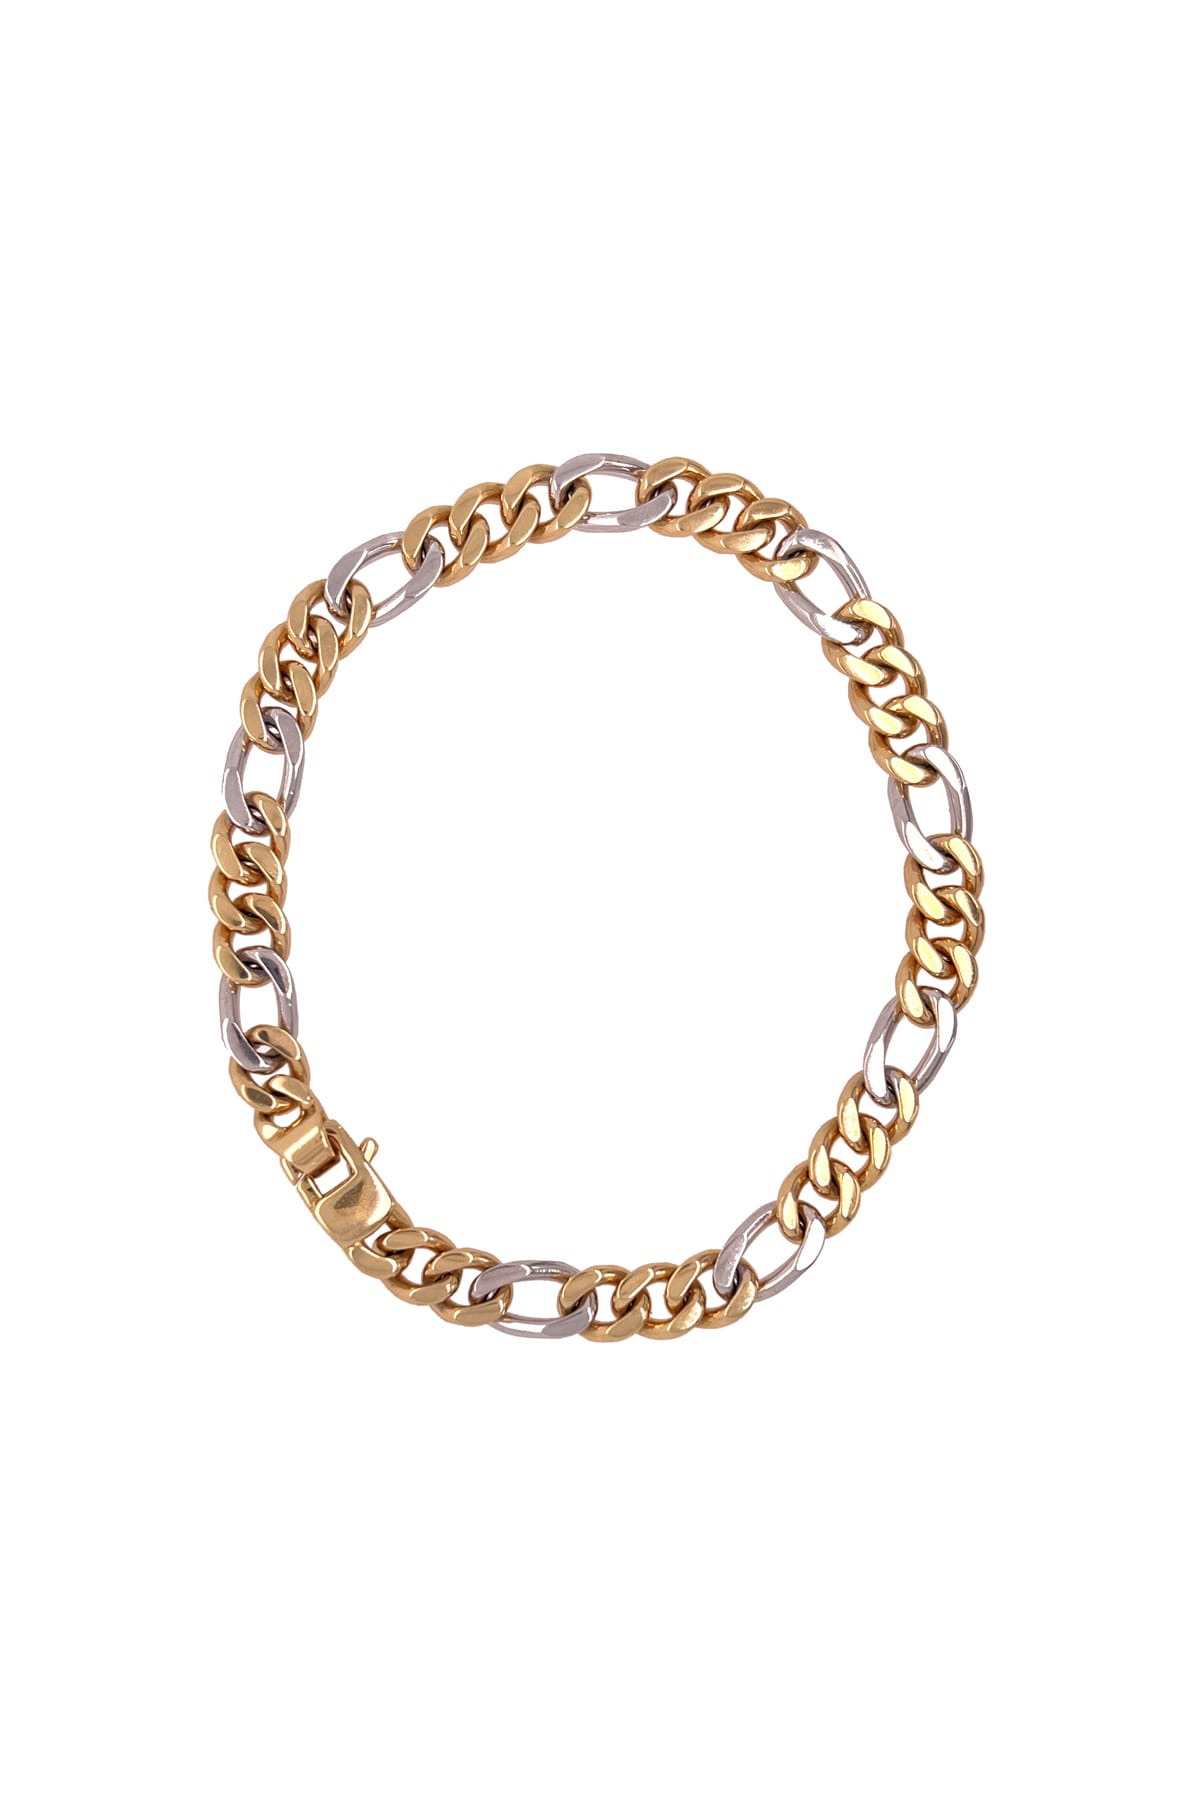 14 Carat Gold 1+3 Curb Exclusive Italian Link Bracelet available at LeGassick Diamonds and Jewellery Gold Coast, Australia.